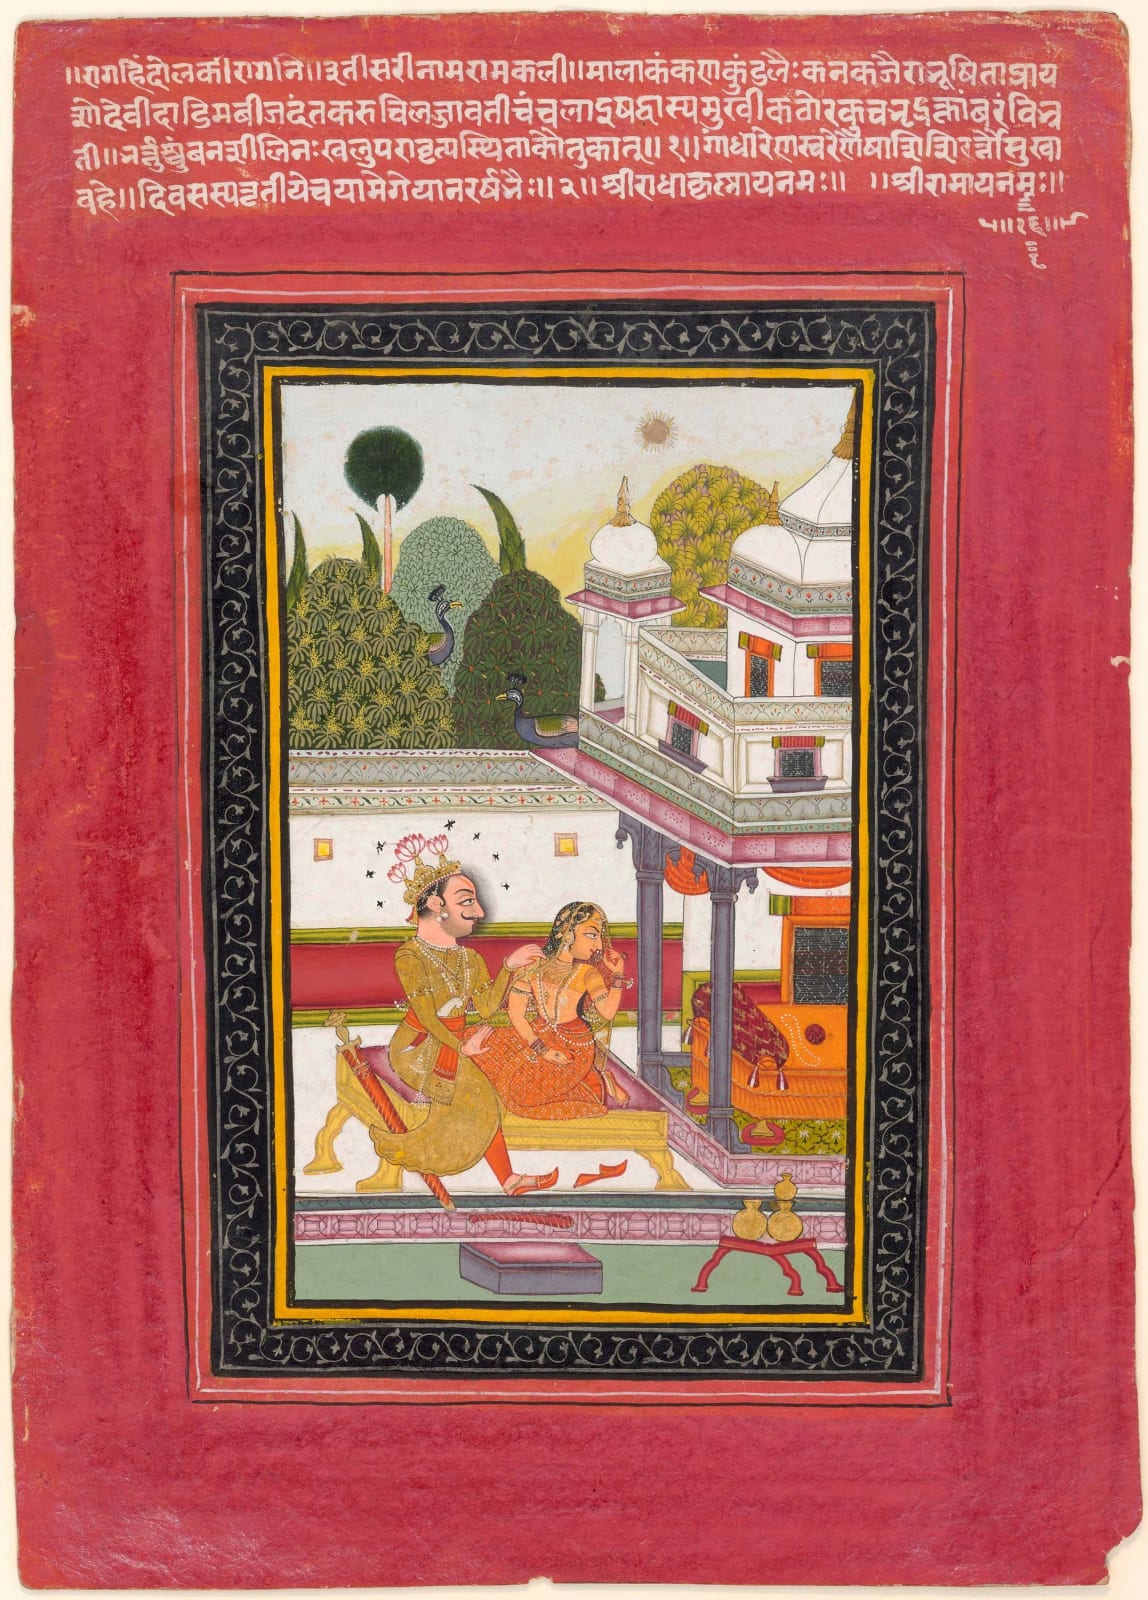 Ramkali Ragini: Page from a Ragamala series, Kota, 1768, by Dalu